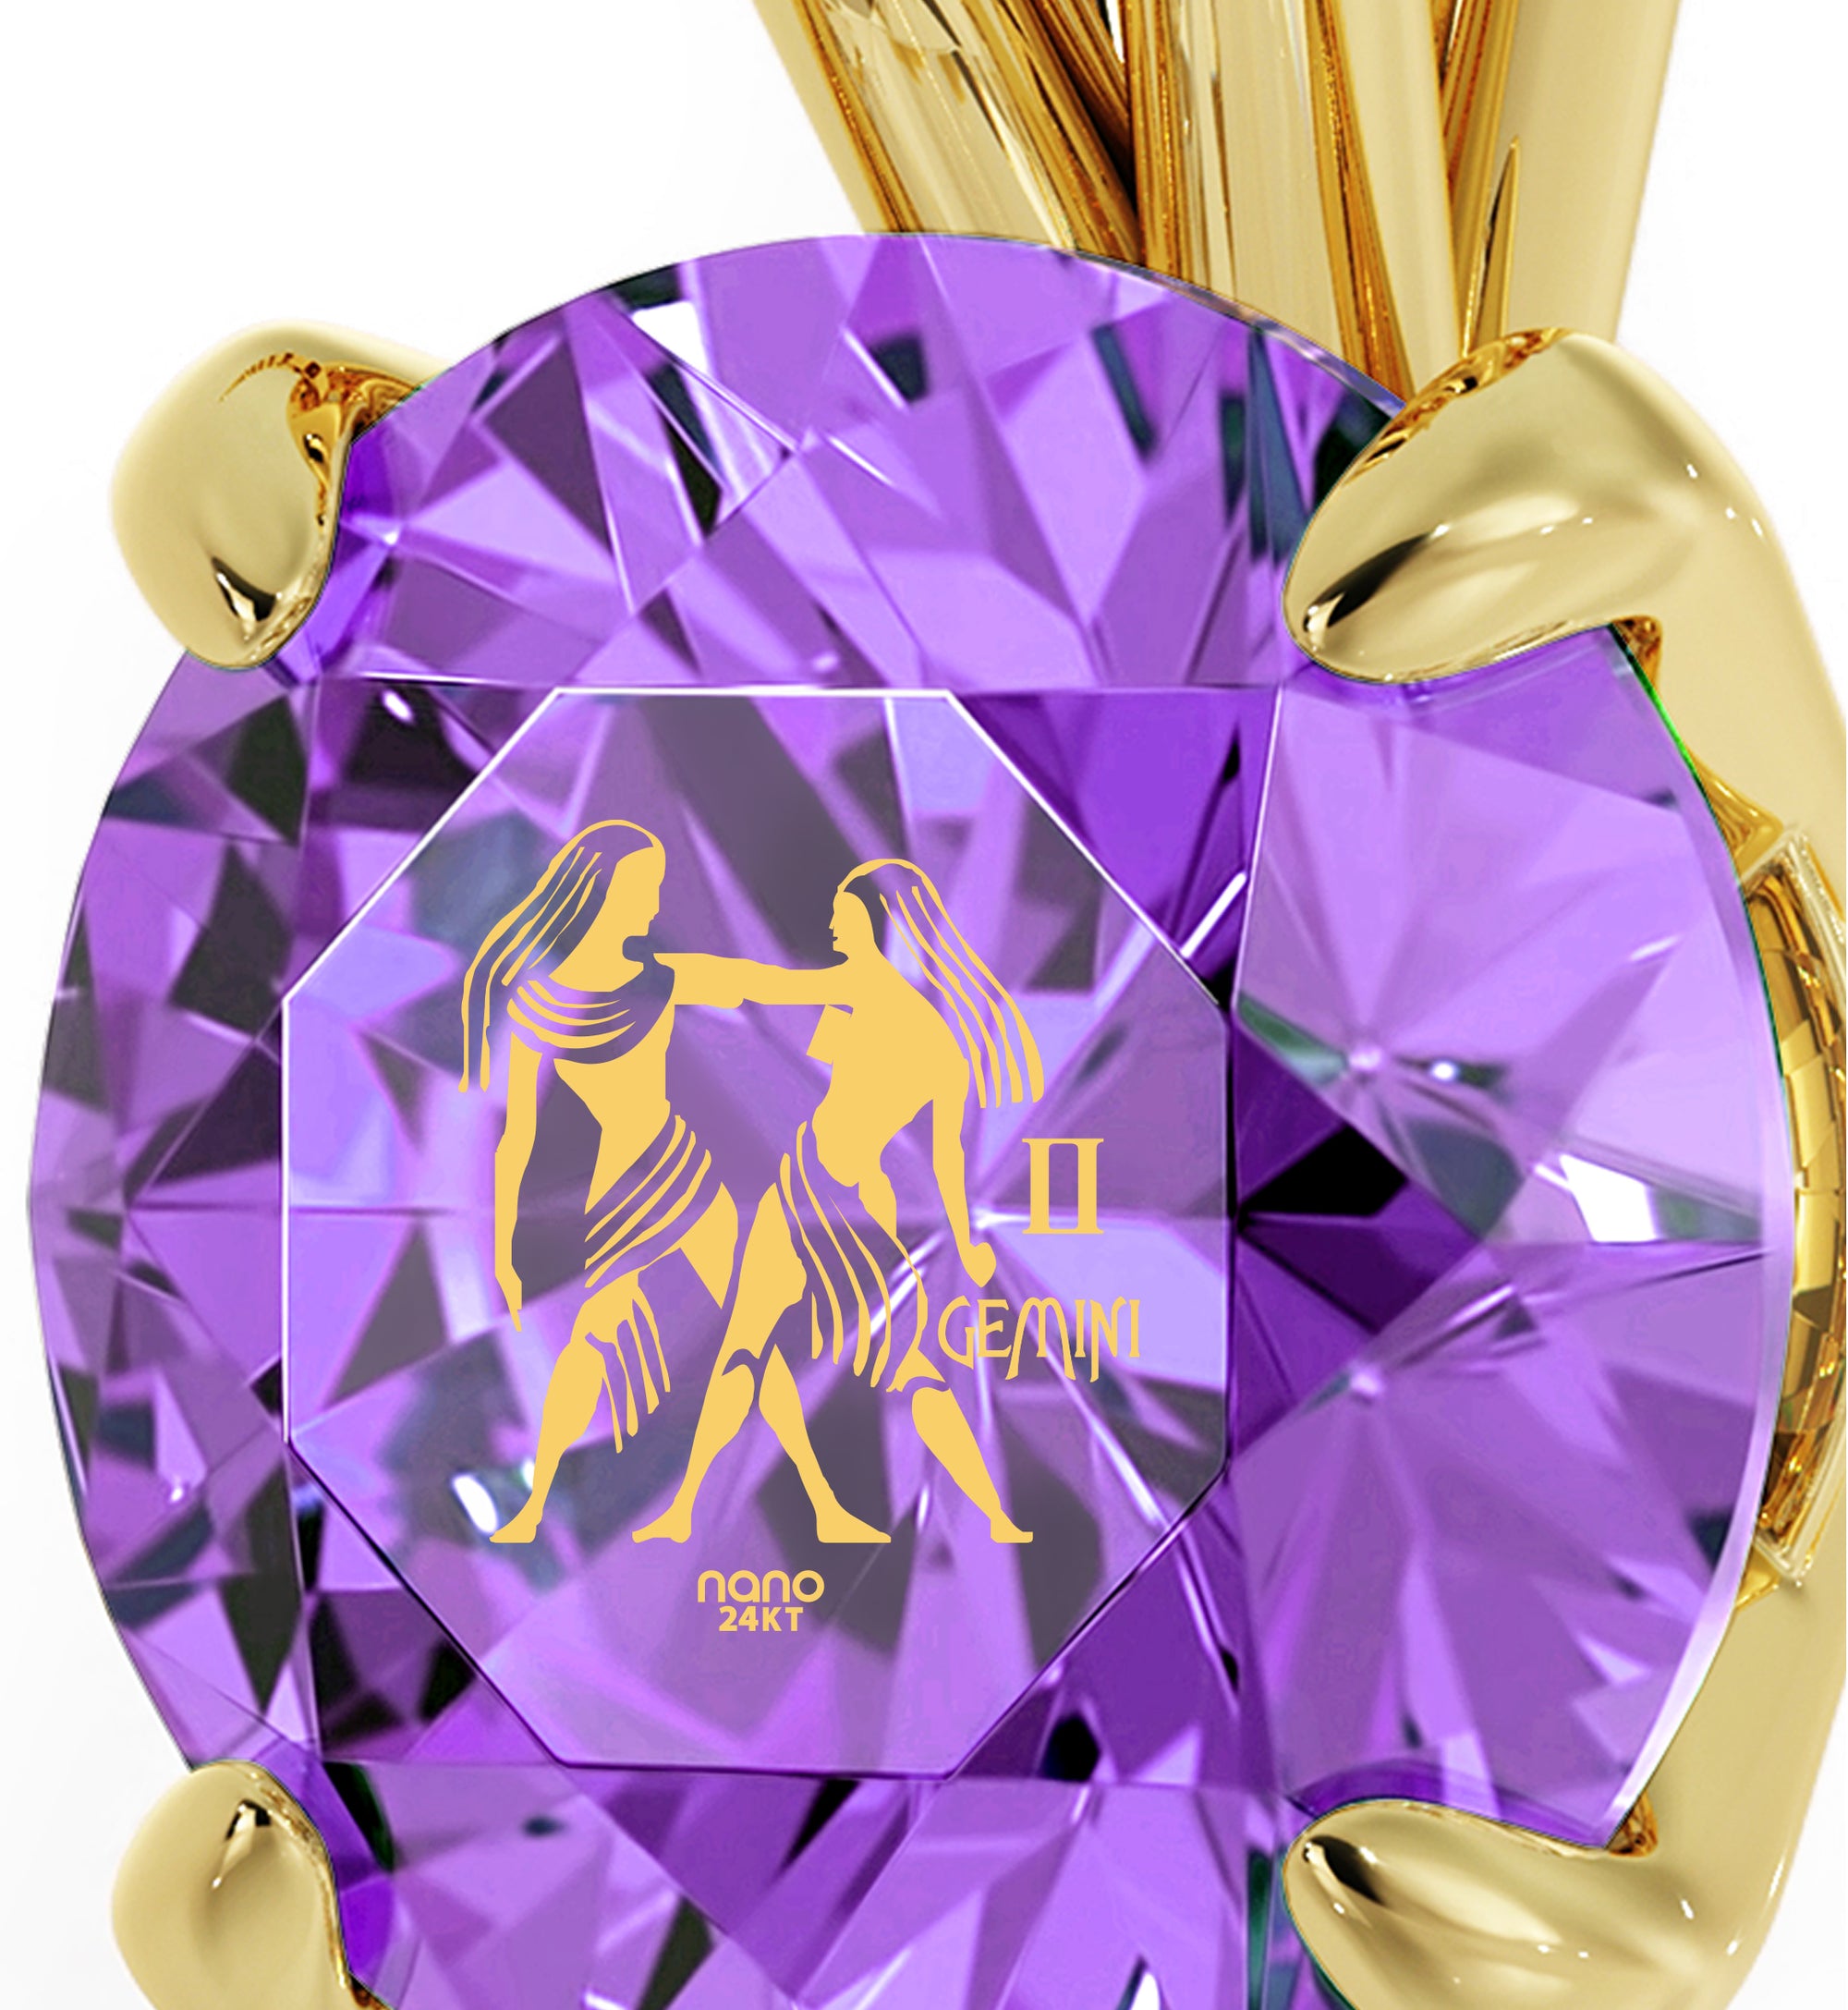 Necklace - 14k Difference Gold Gemini Classic Jewelry a Zodiac NanoStyle Jewelry with |